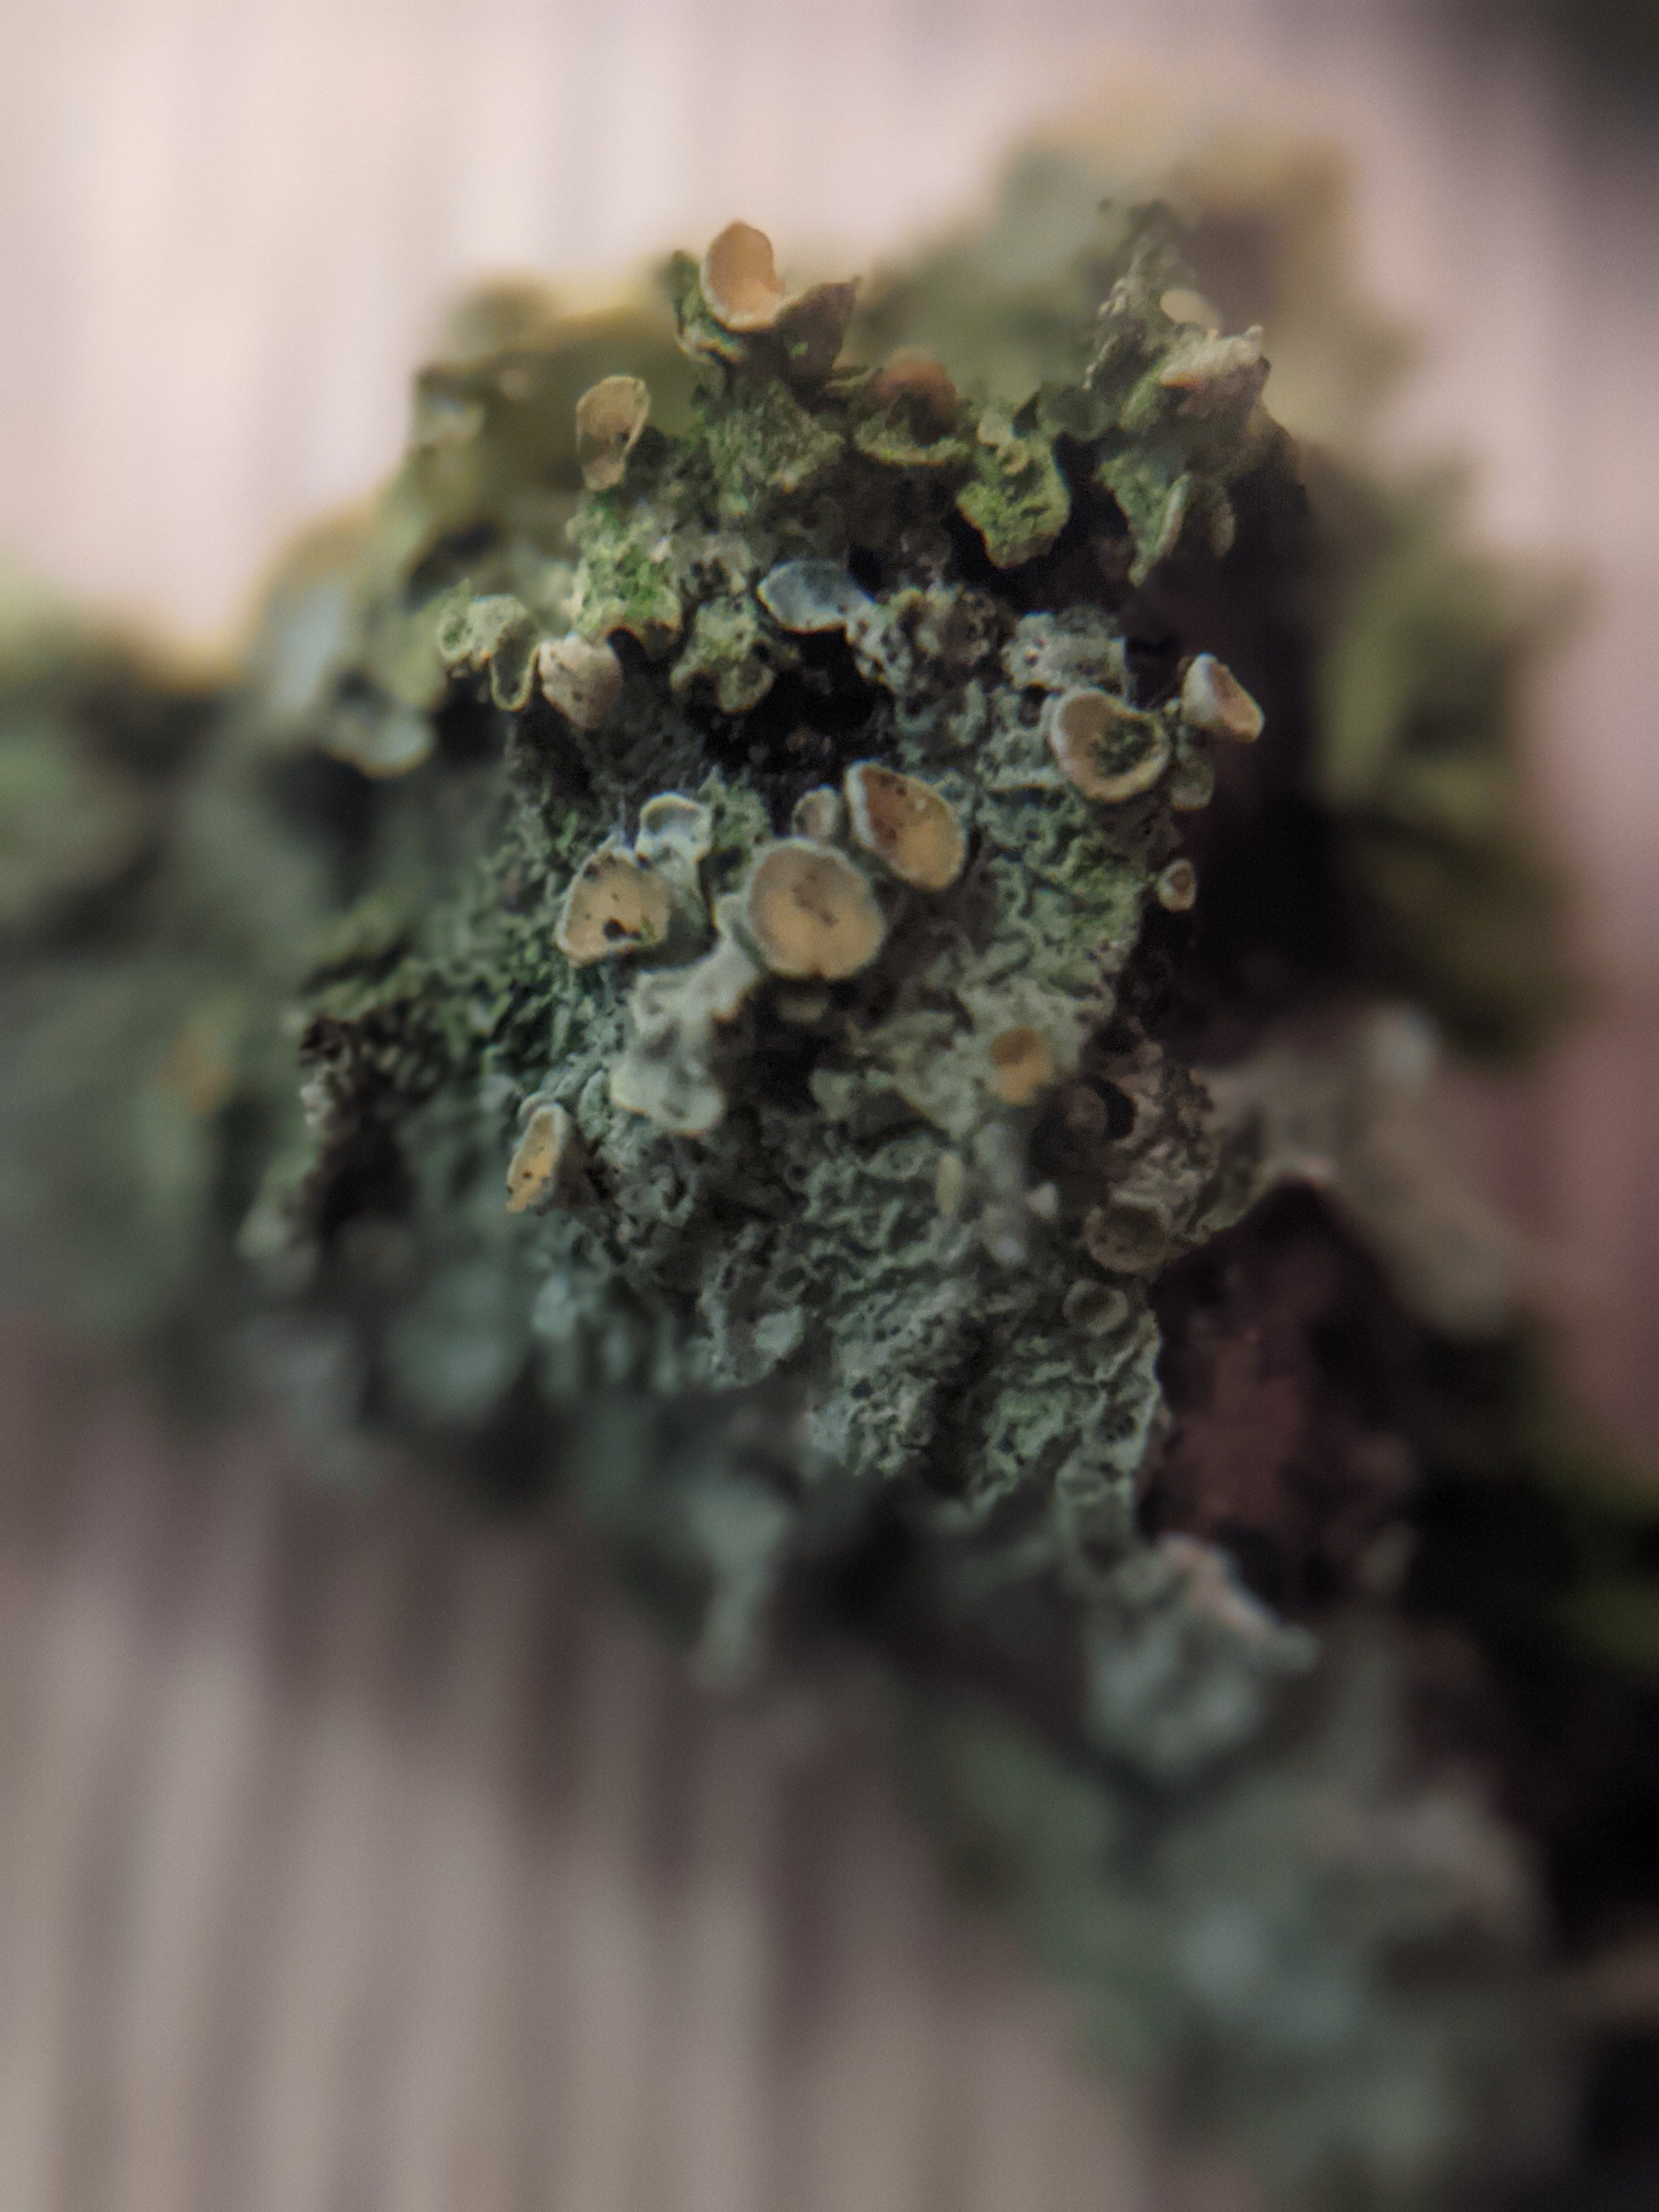 up close at lichen